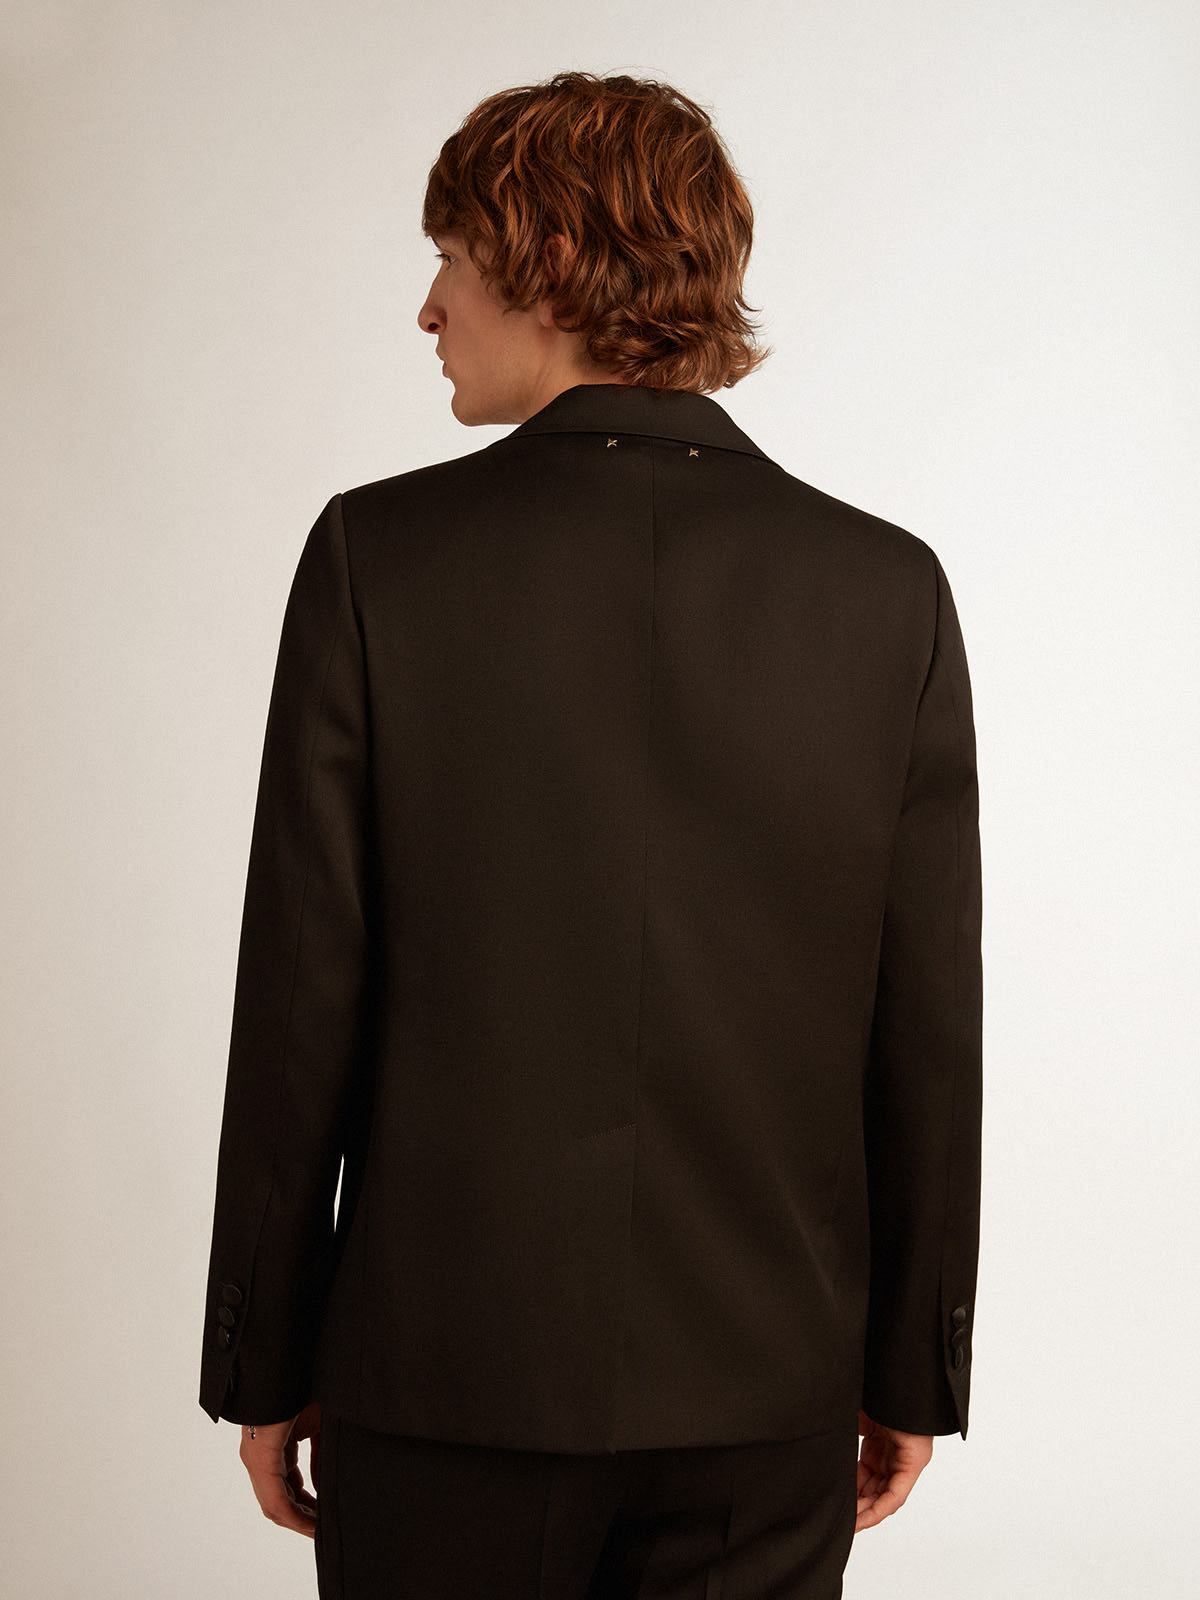 Golden Goose - Men’s tuxedo jacket in black wool gabardine in 